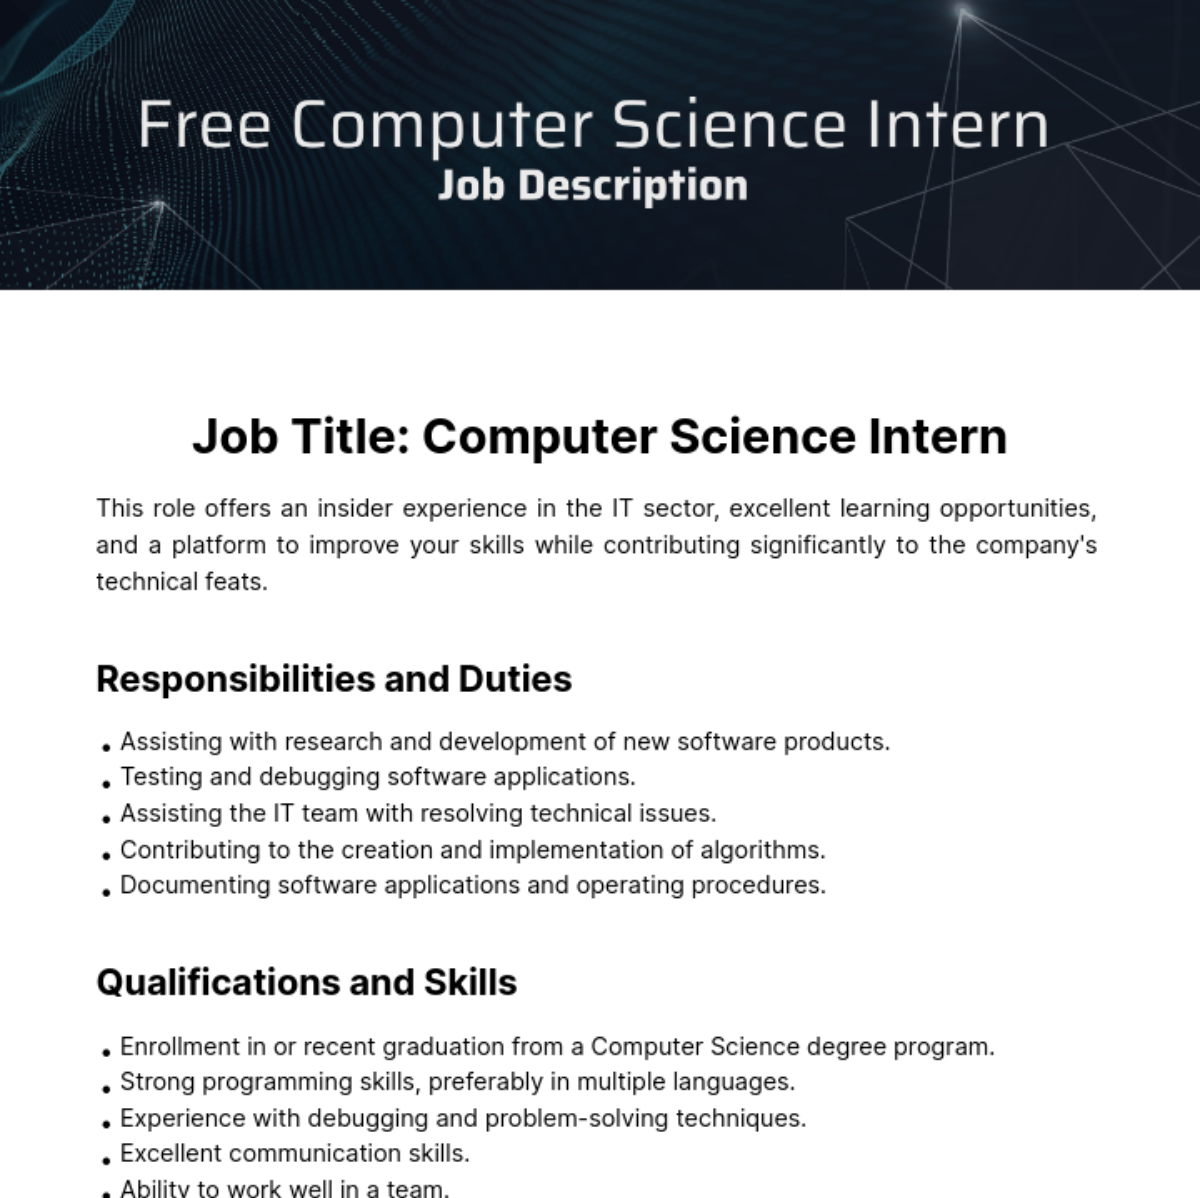 Computer Science Intern Job Description Template